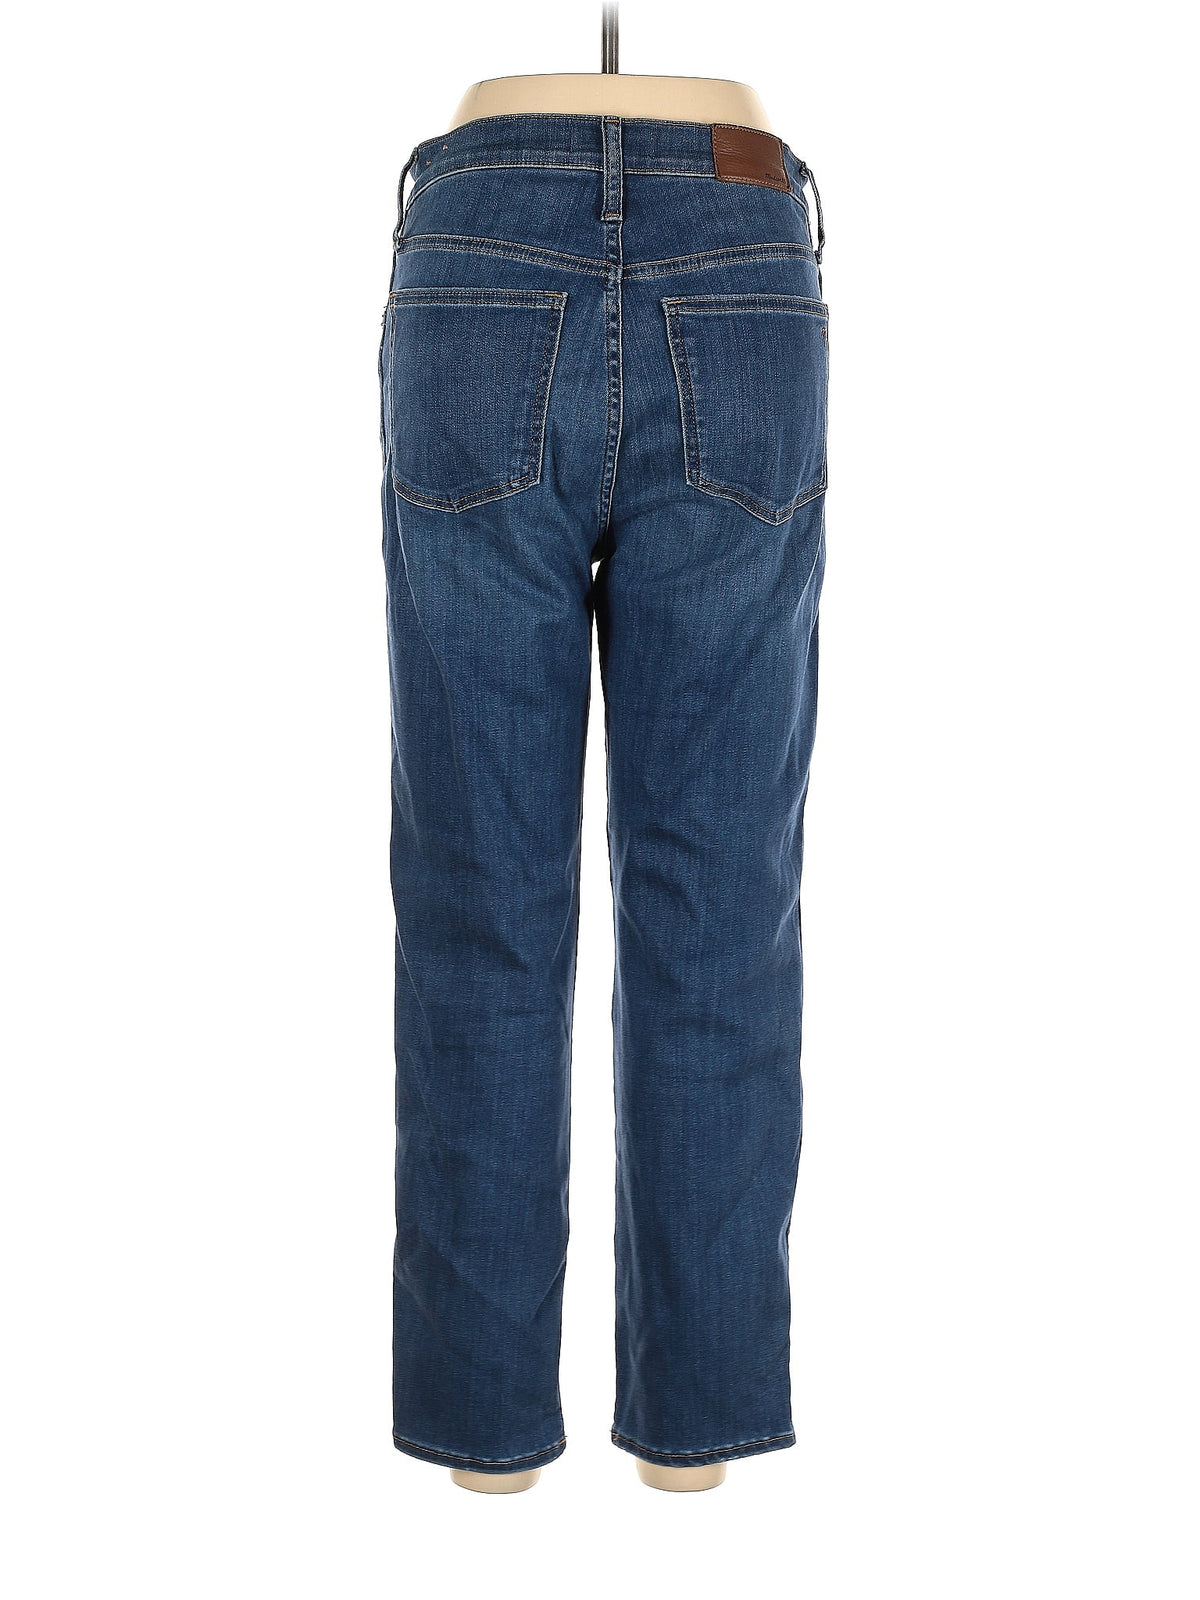 High-Rise Straight-leg Jeans in Medium Wash waist size - 28